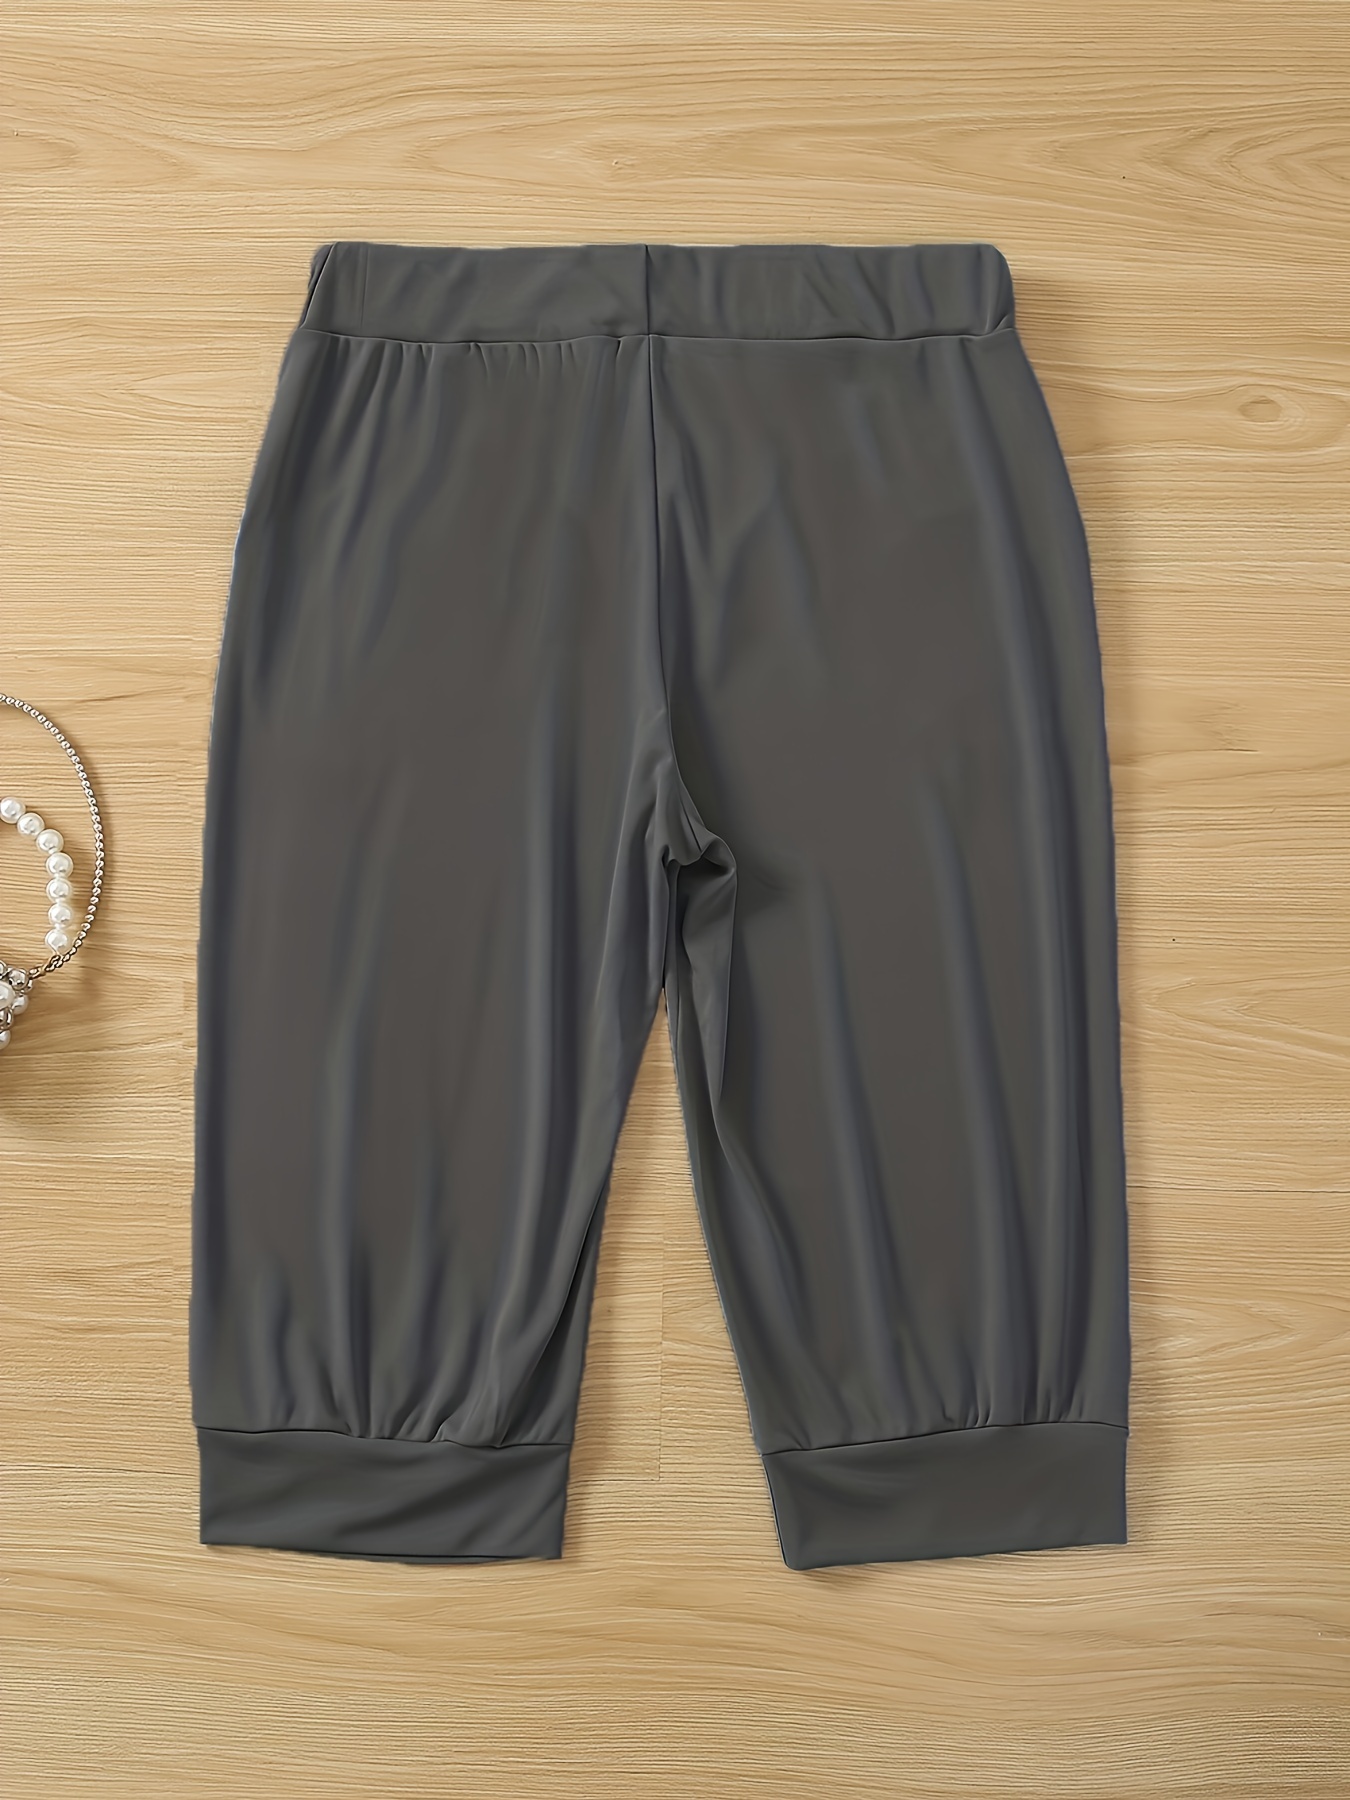 Ladies Plus Size 3/4 Length Cropped Elasticated Stretchy Capri Pants Shorts